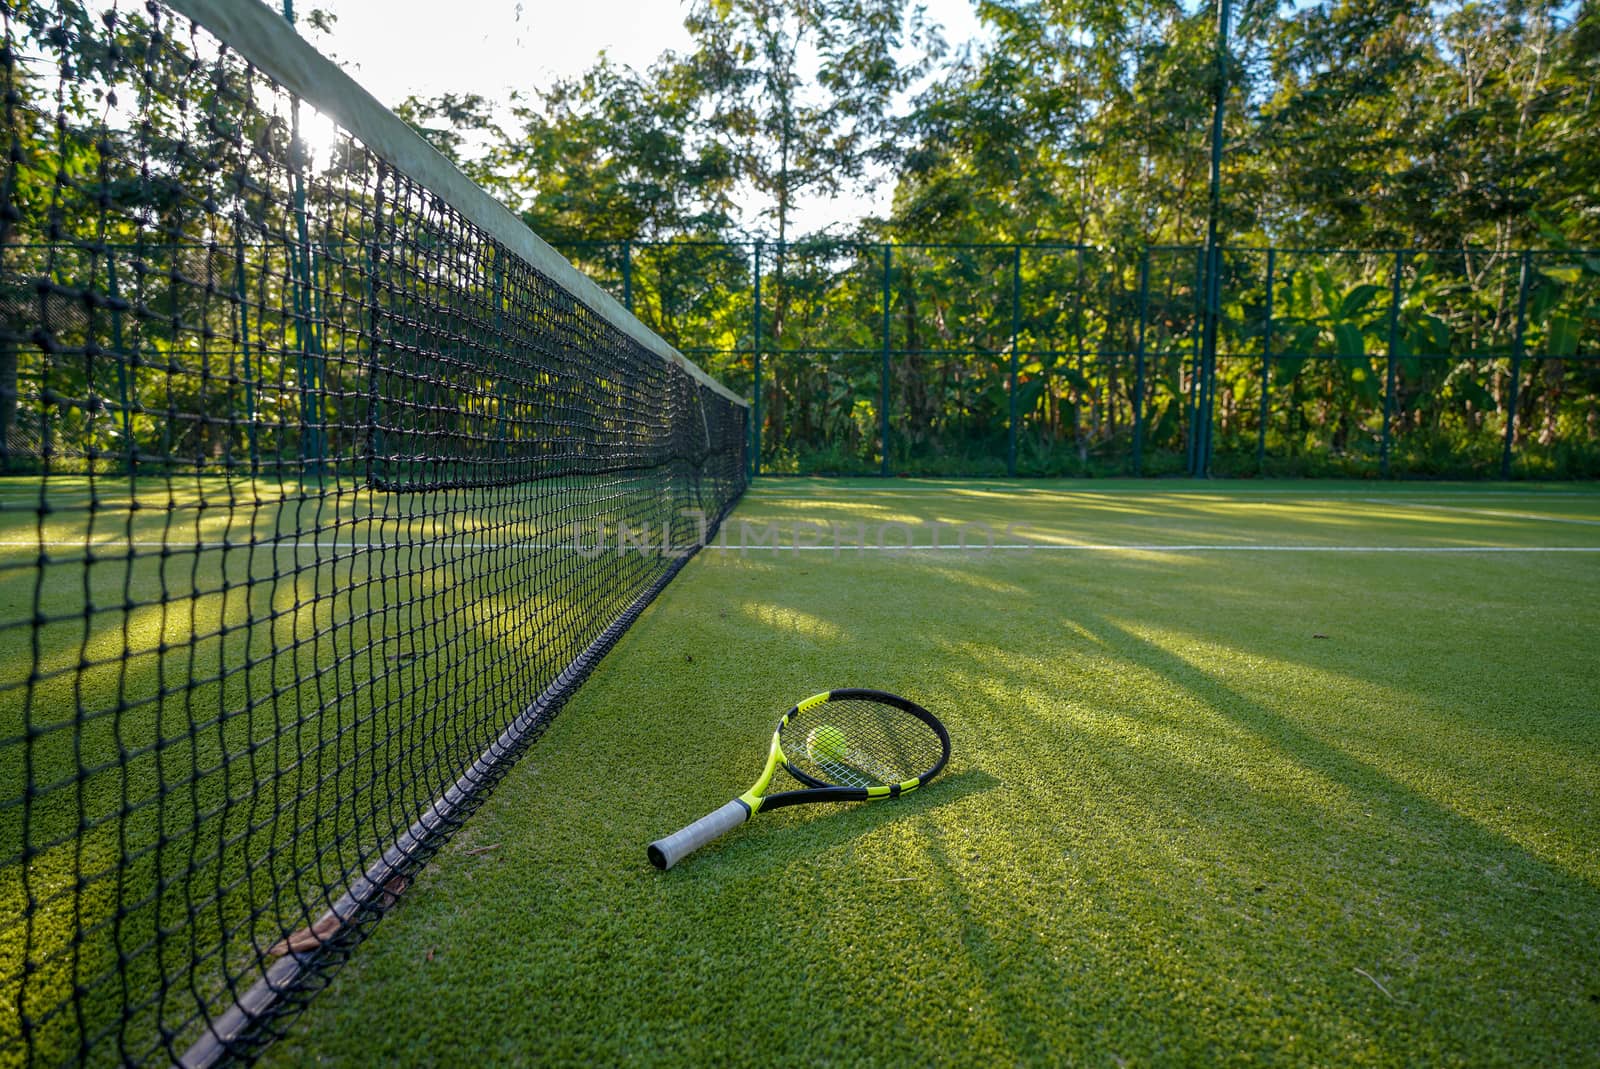 Tennis ball and racket in the artificial grass tennis court.